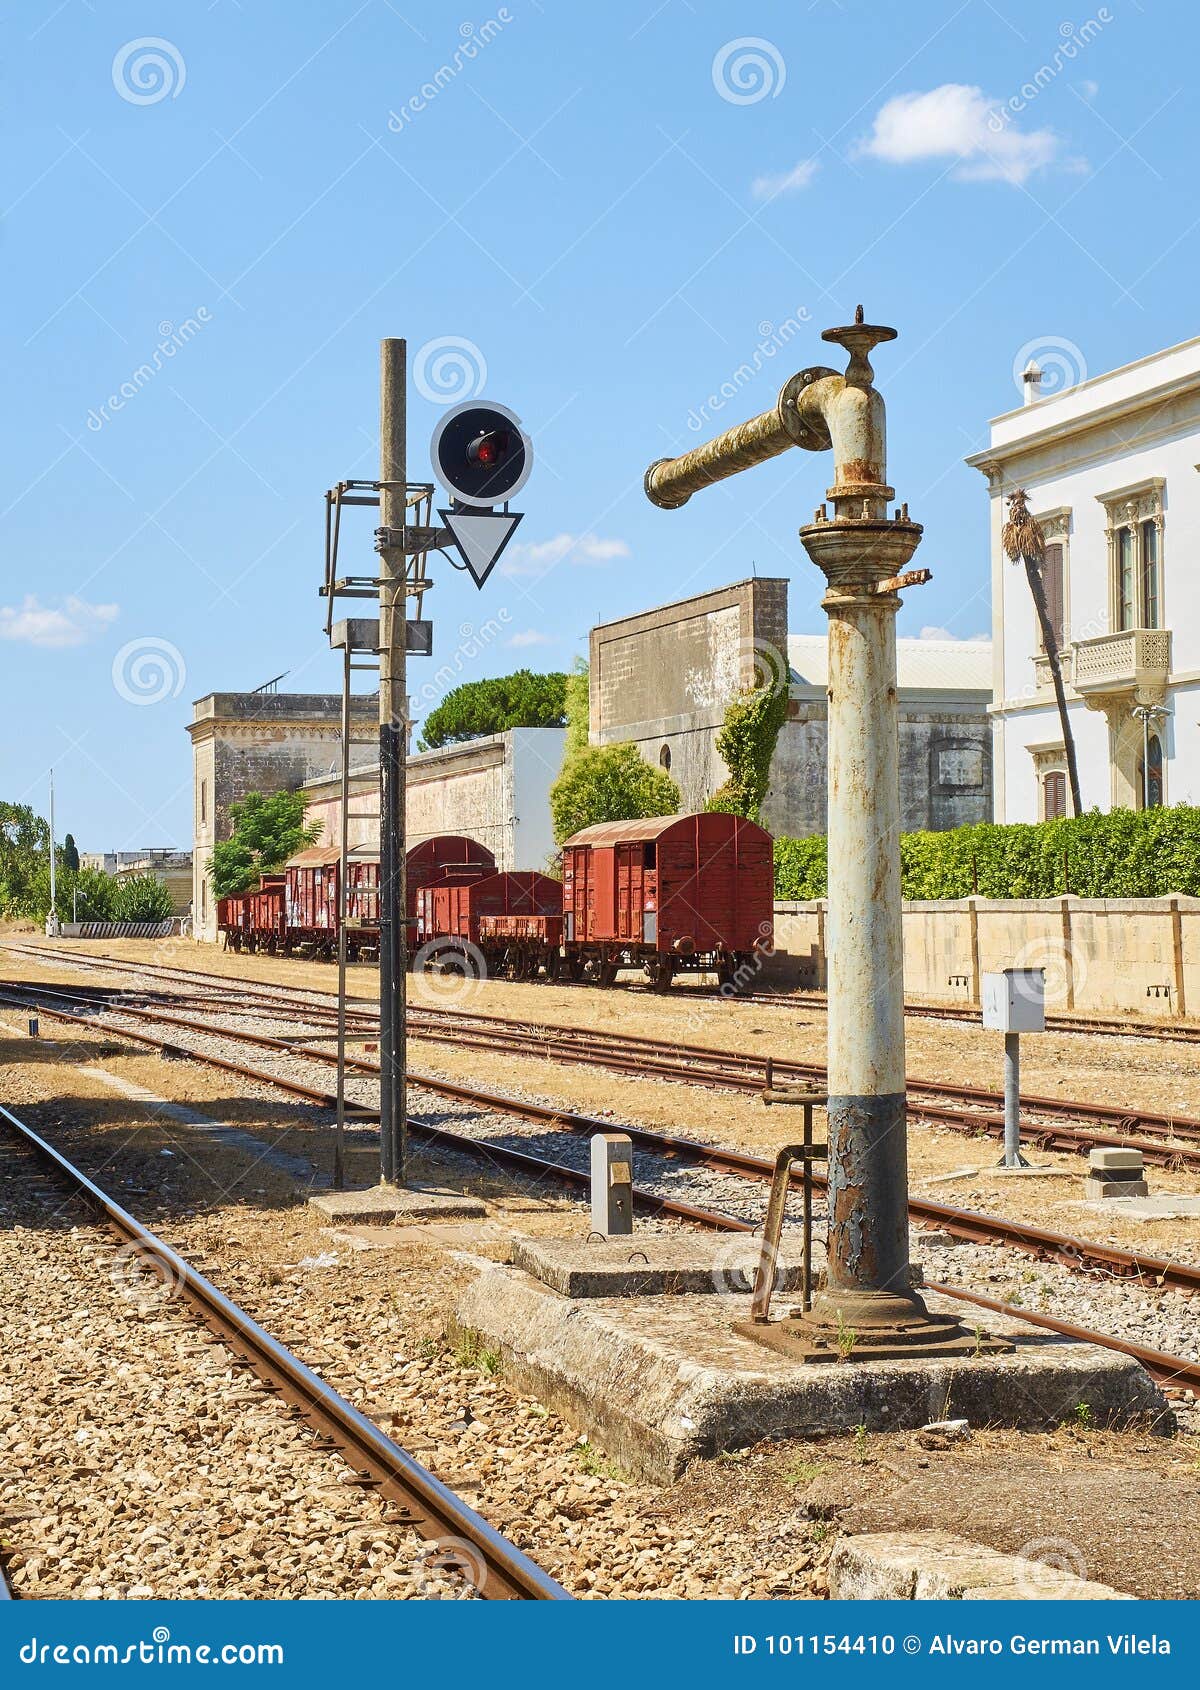 regional italian railway of southern italy.